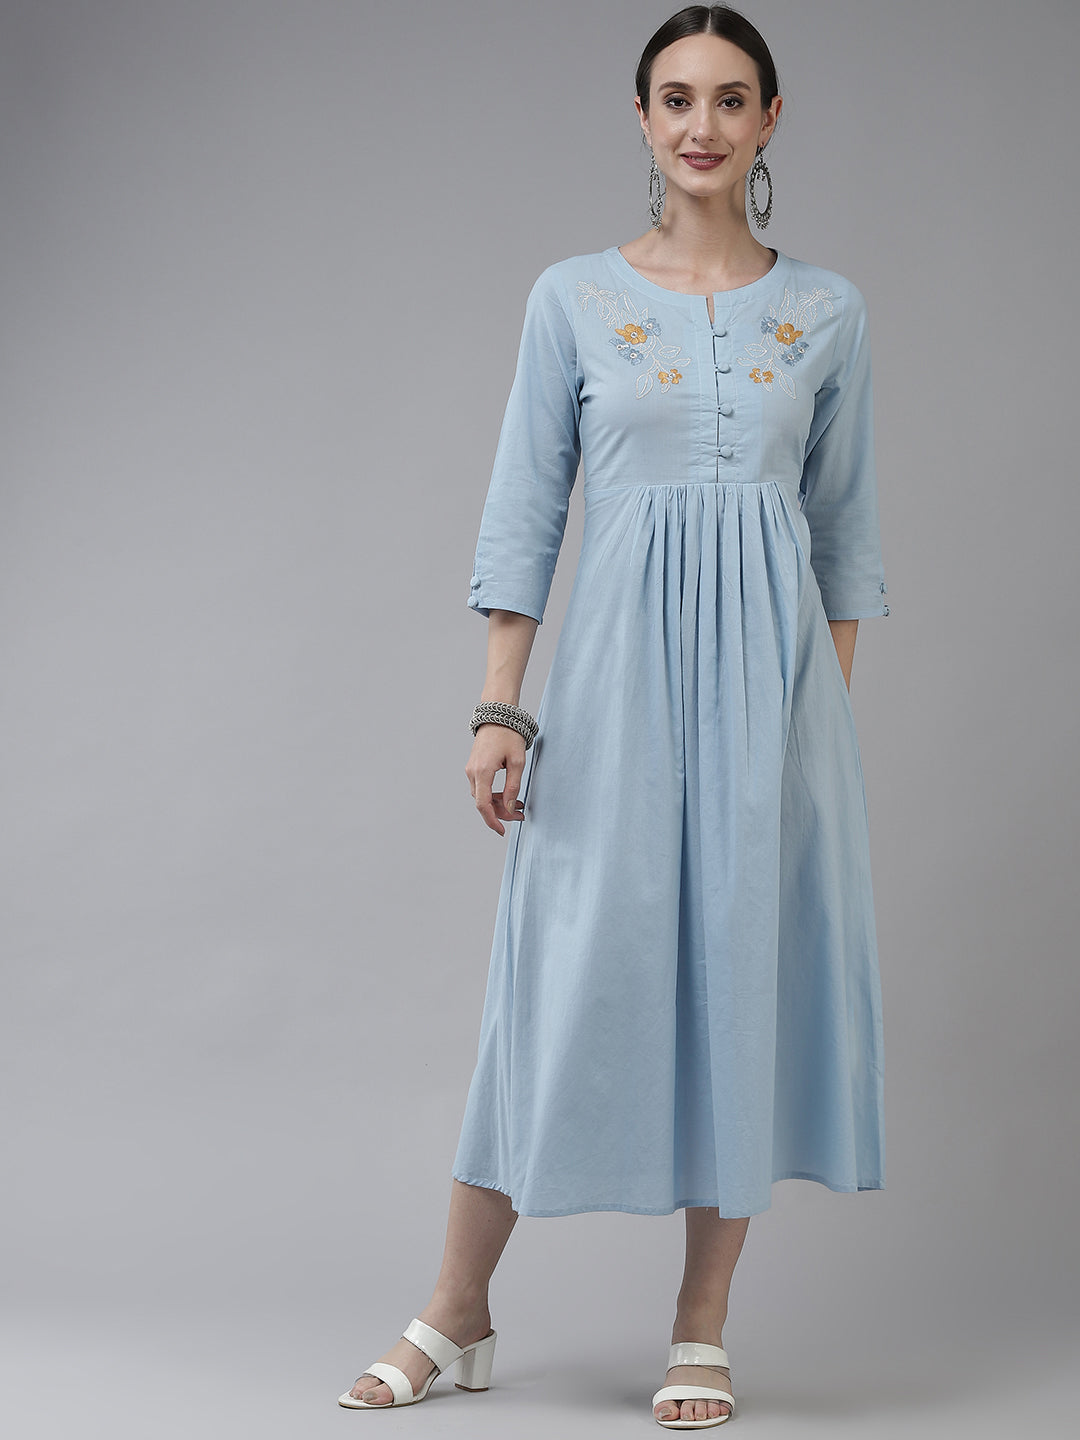 Blue Ethnic Midi Dress-Yufta Store-9784DRSBLS